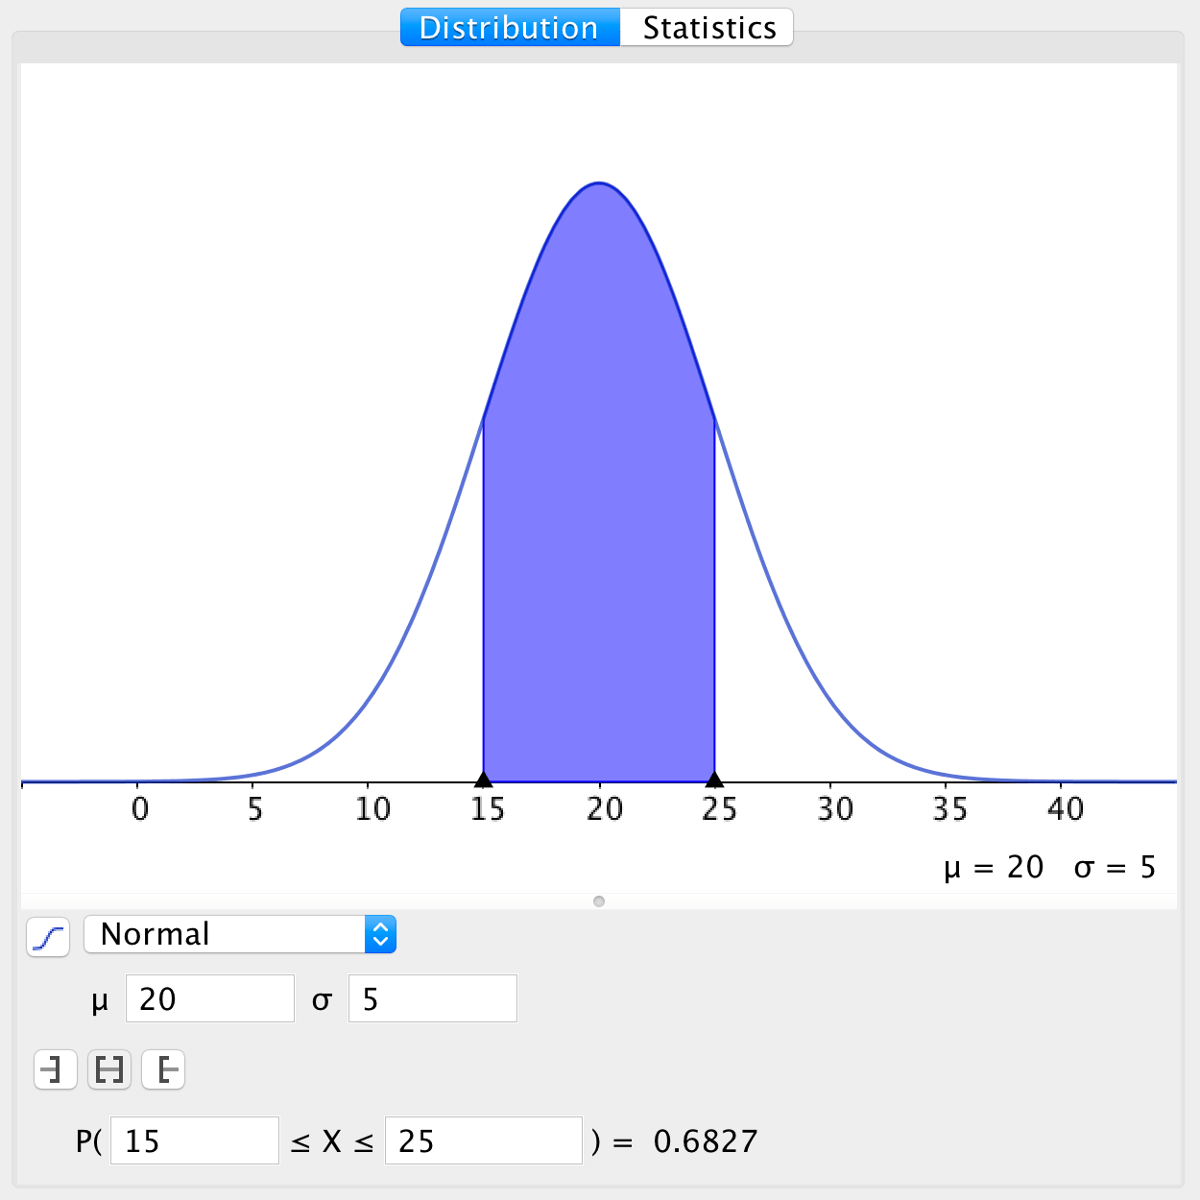 geogebra-tutorial-statistics-and-probability